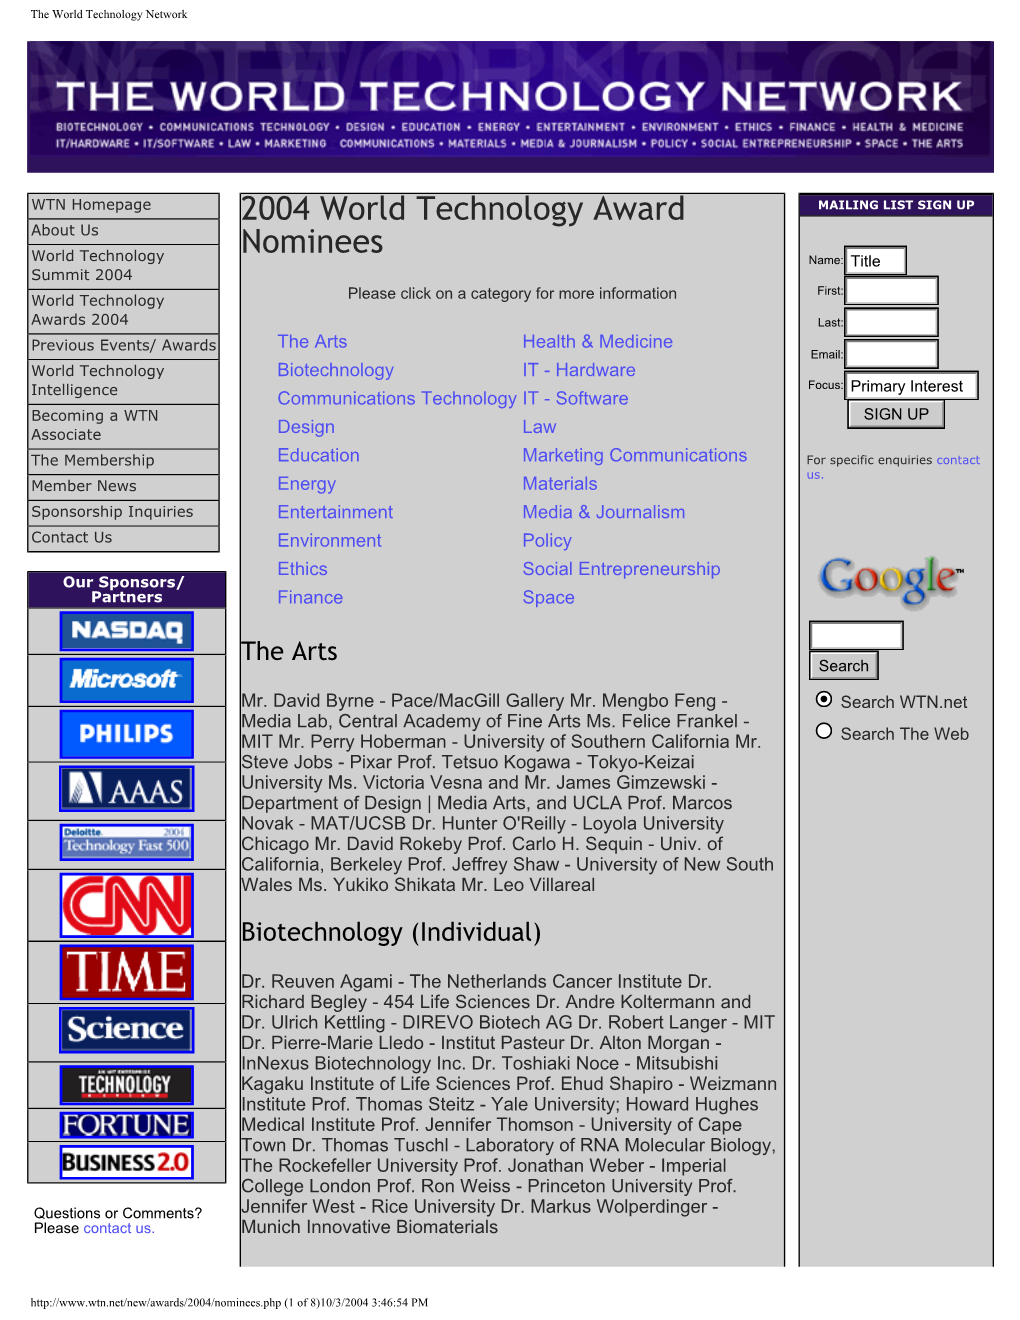 The World Technology Network